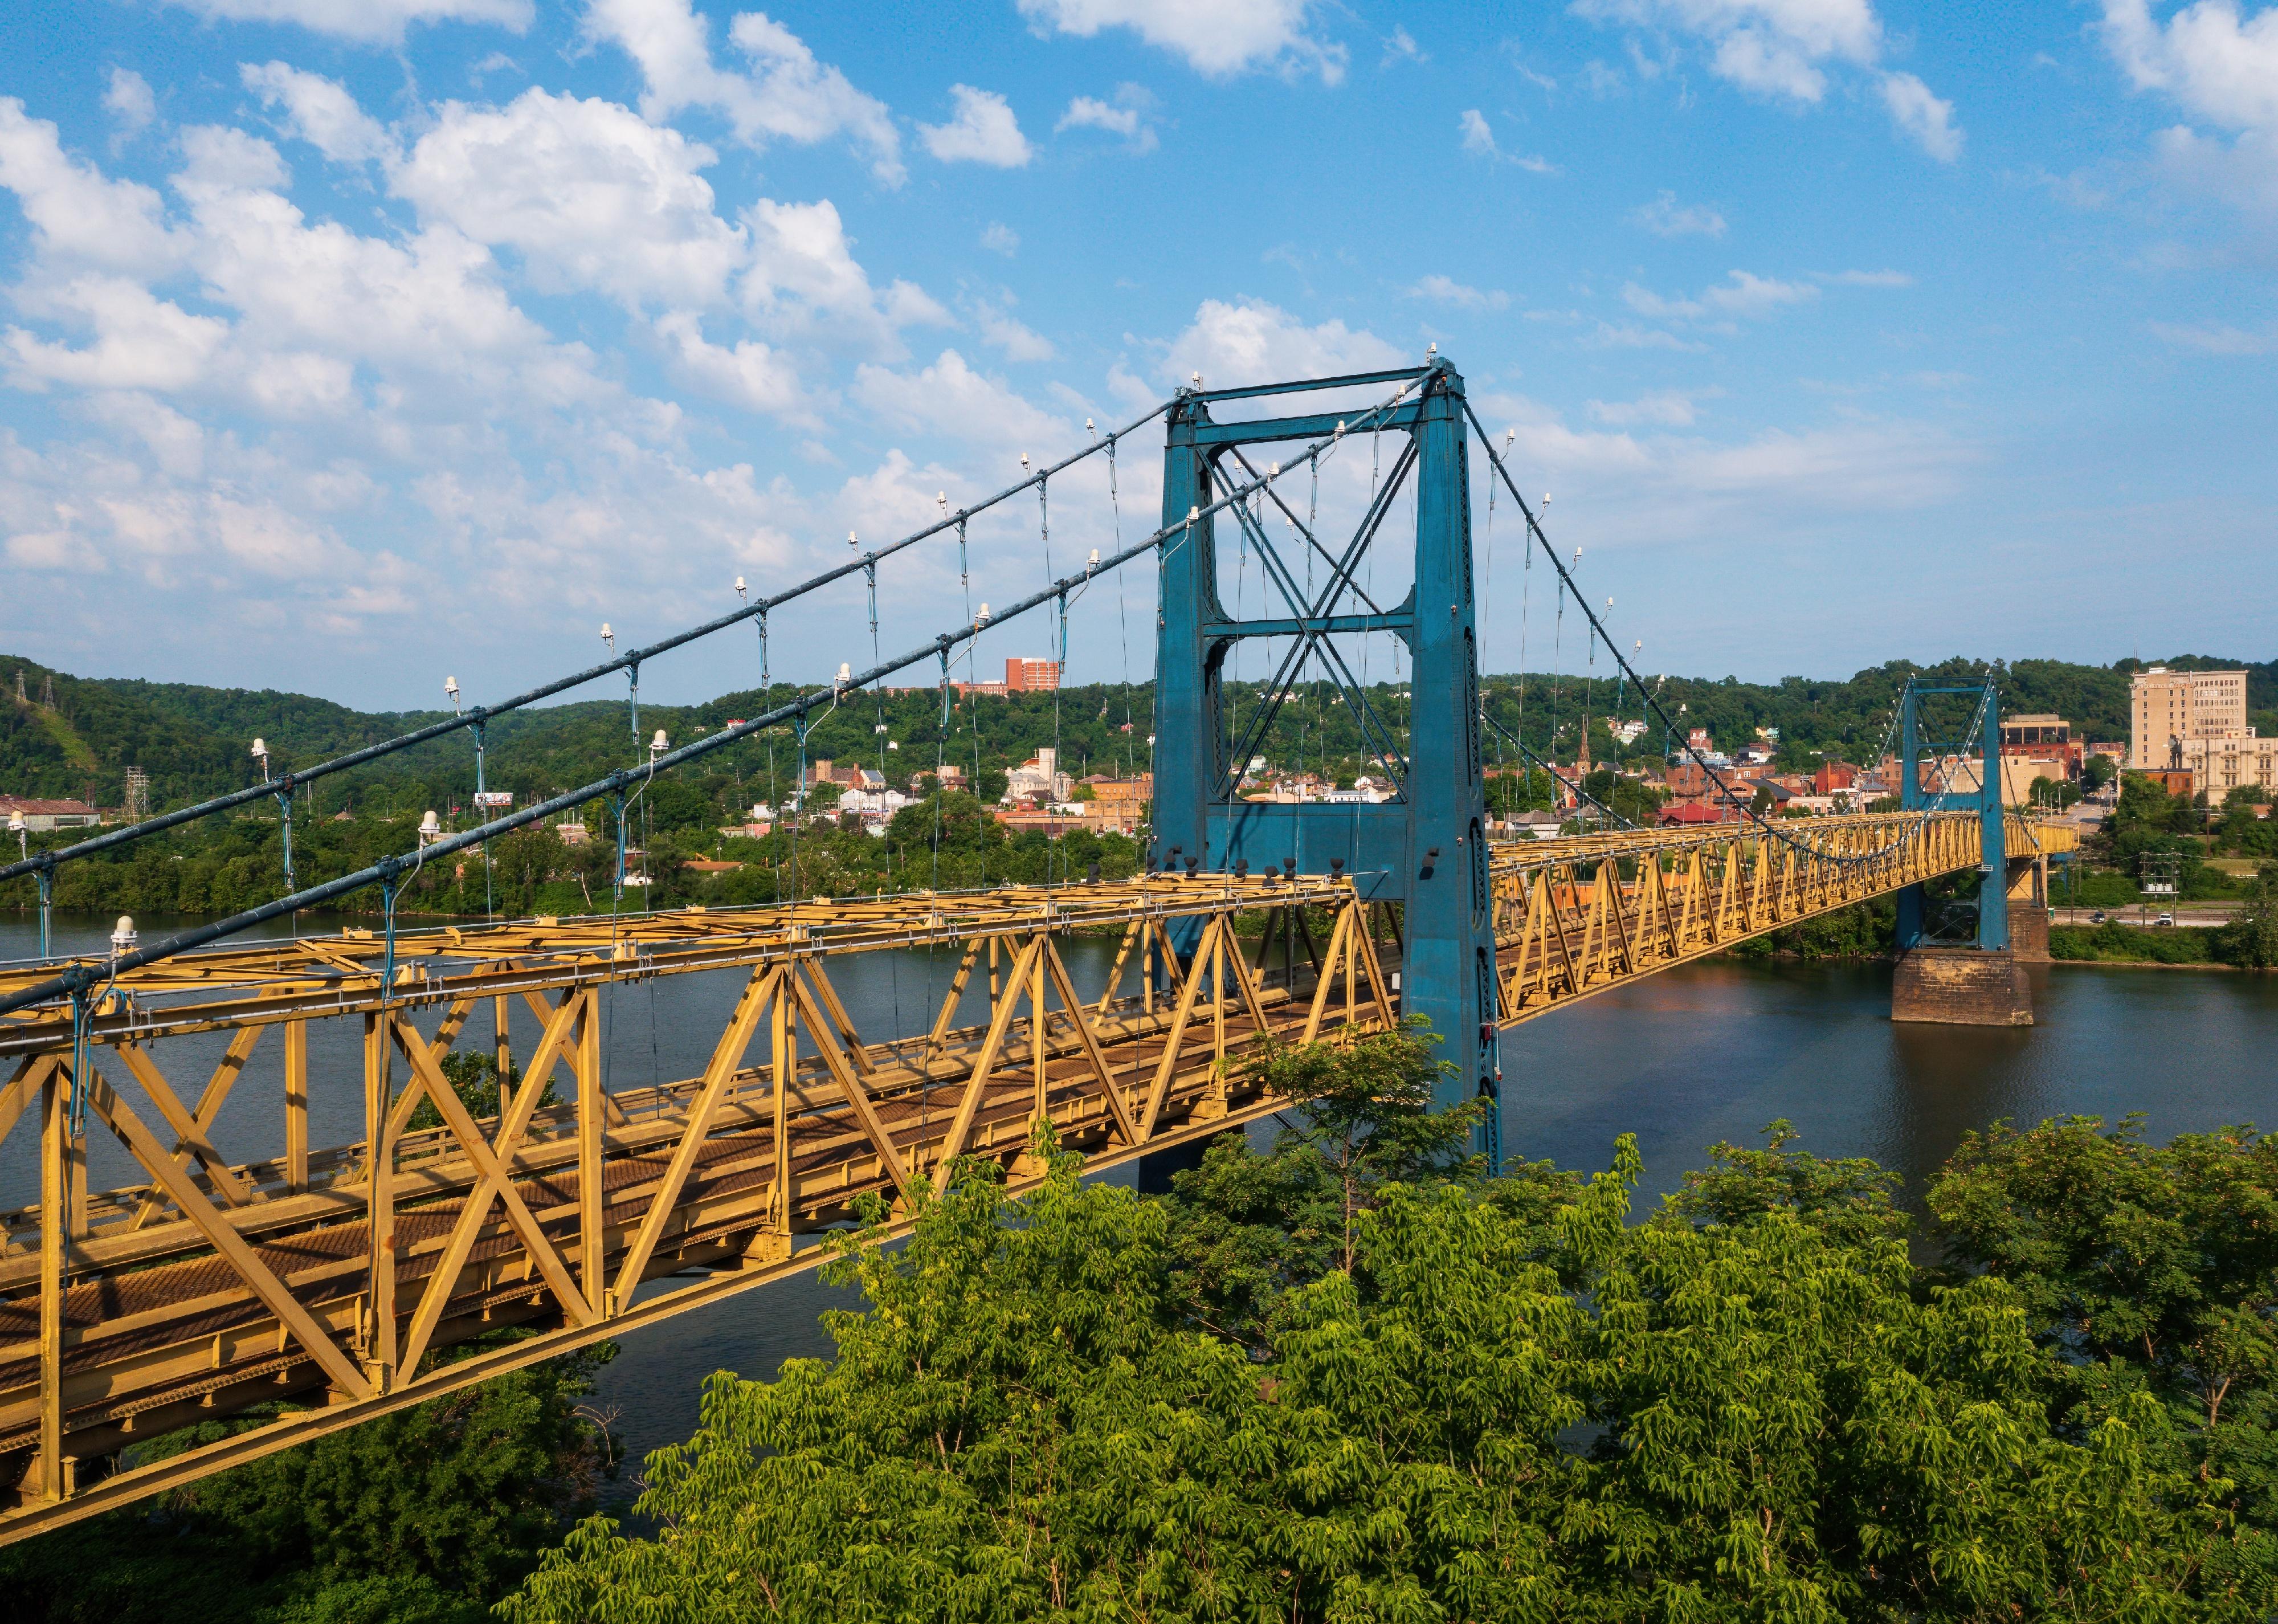 The historic Market Street Bridge between Weirton, West Virginia and Steubenville, Ohio.